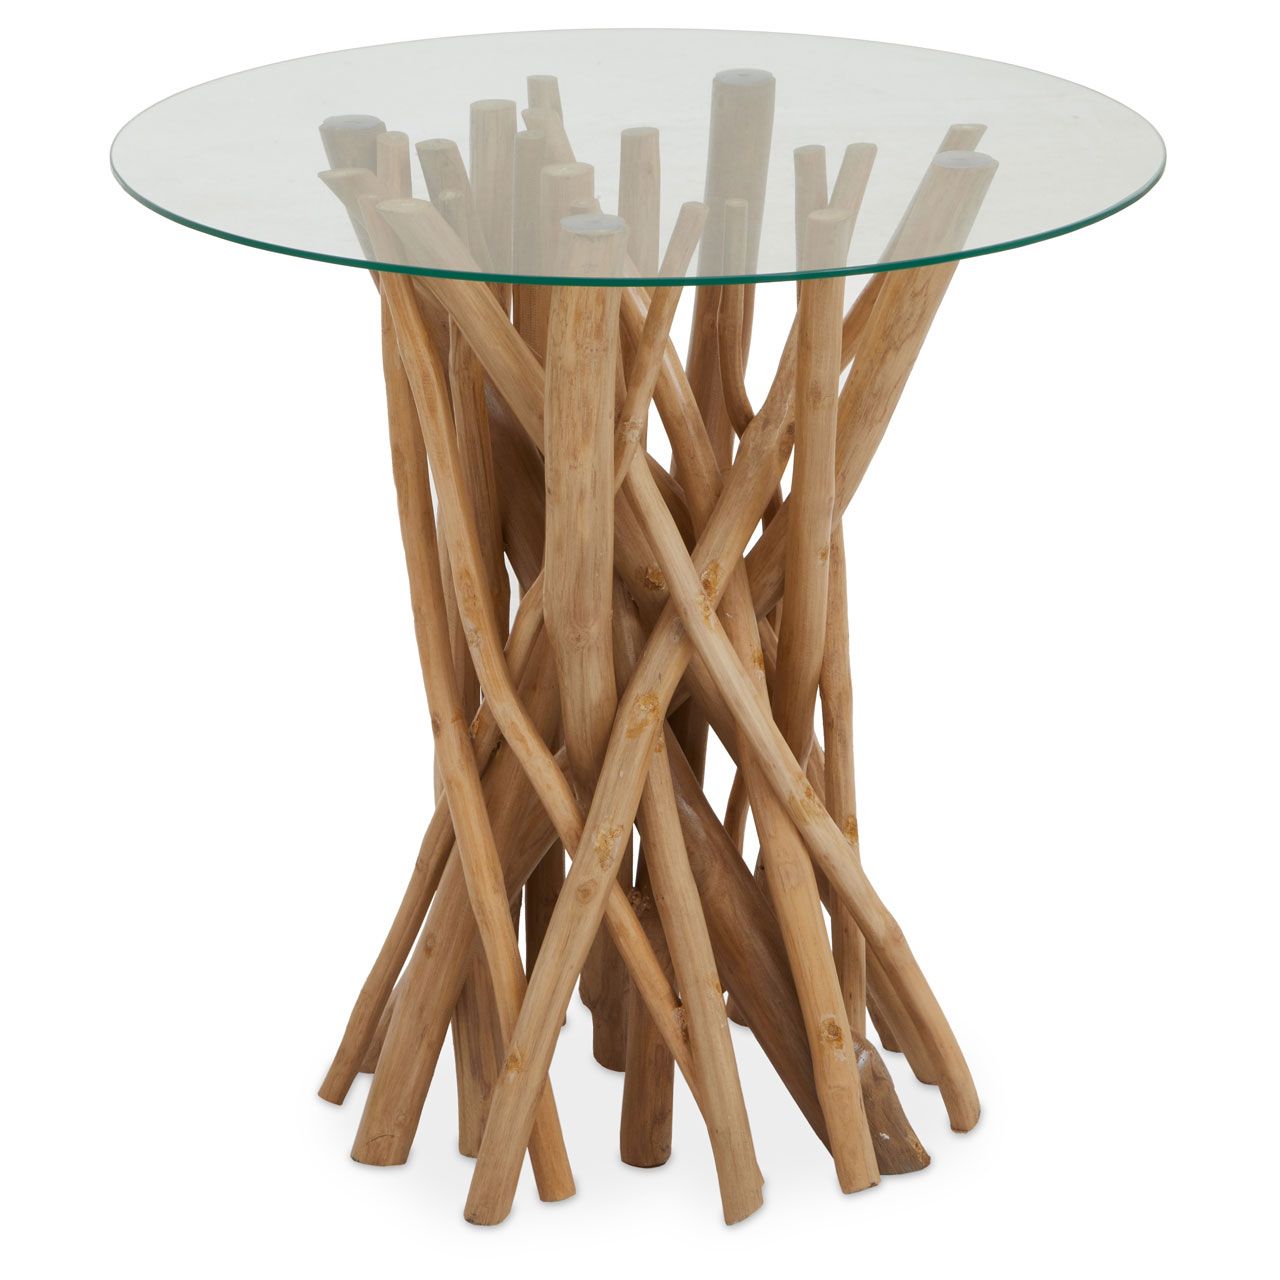 Malang Table With Glass Top Renewable Teak Wood Base